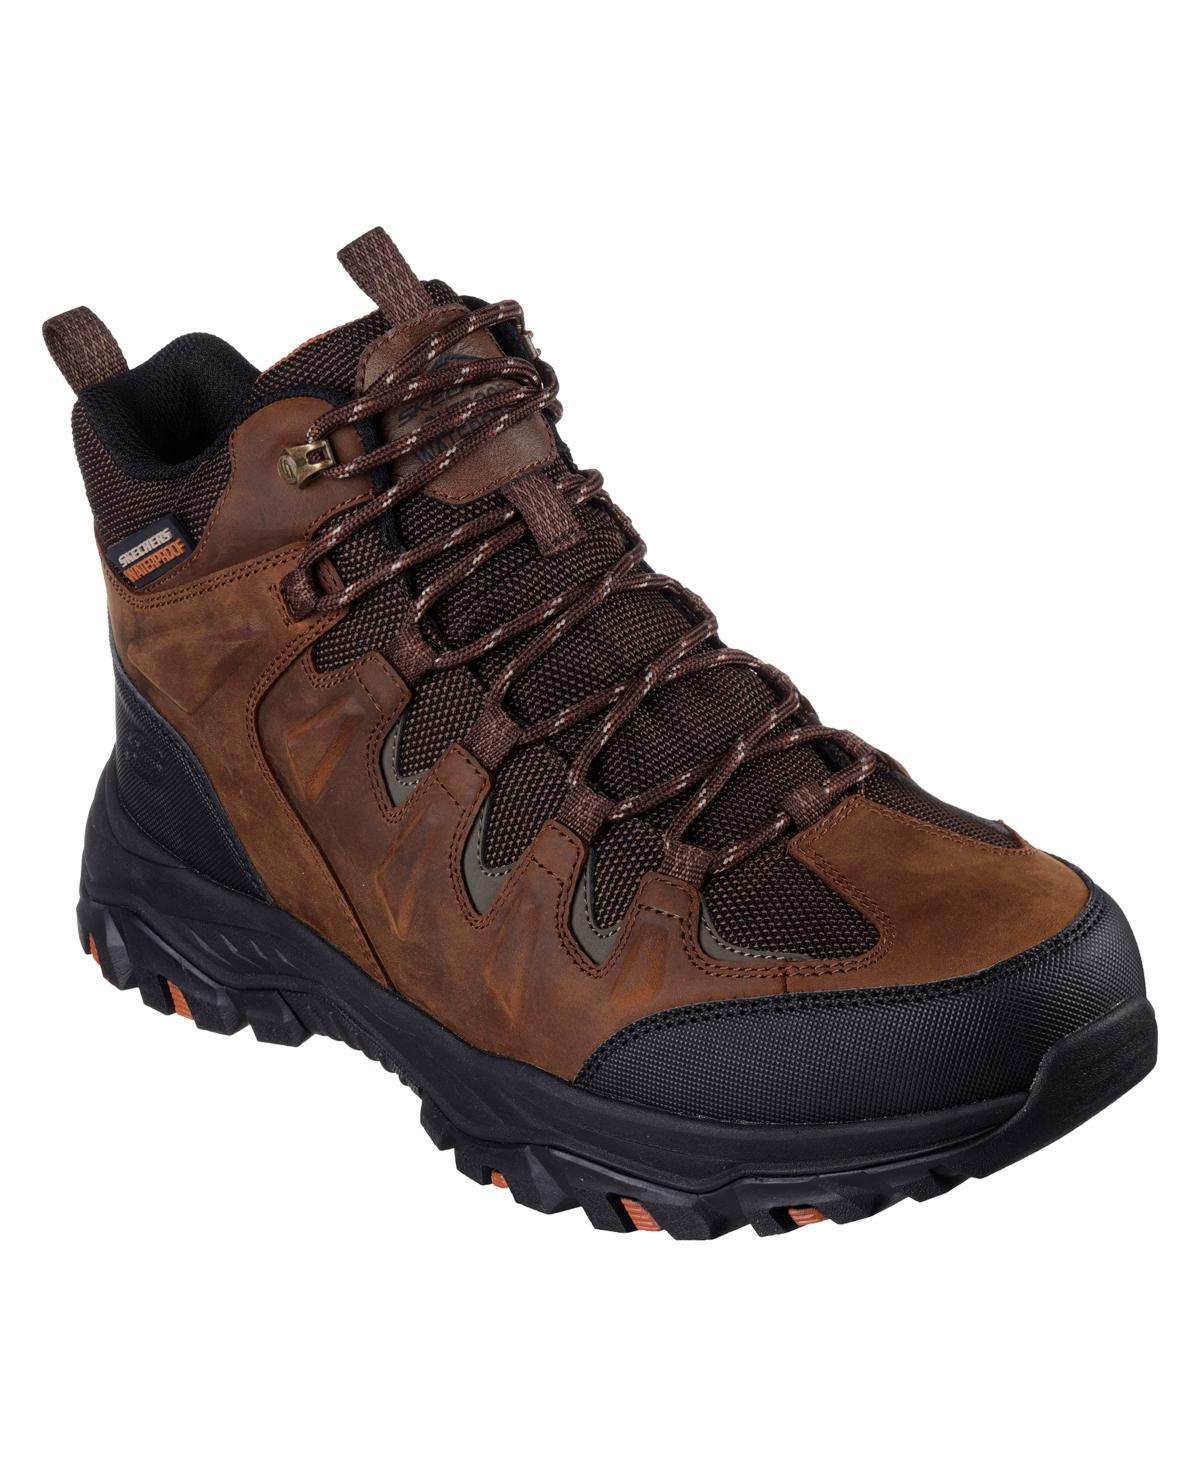 Skechers Men's Rickter-Branson Waterproof Hiking Boot Product Image